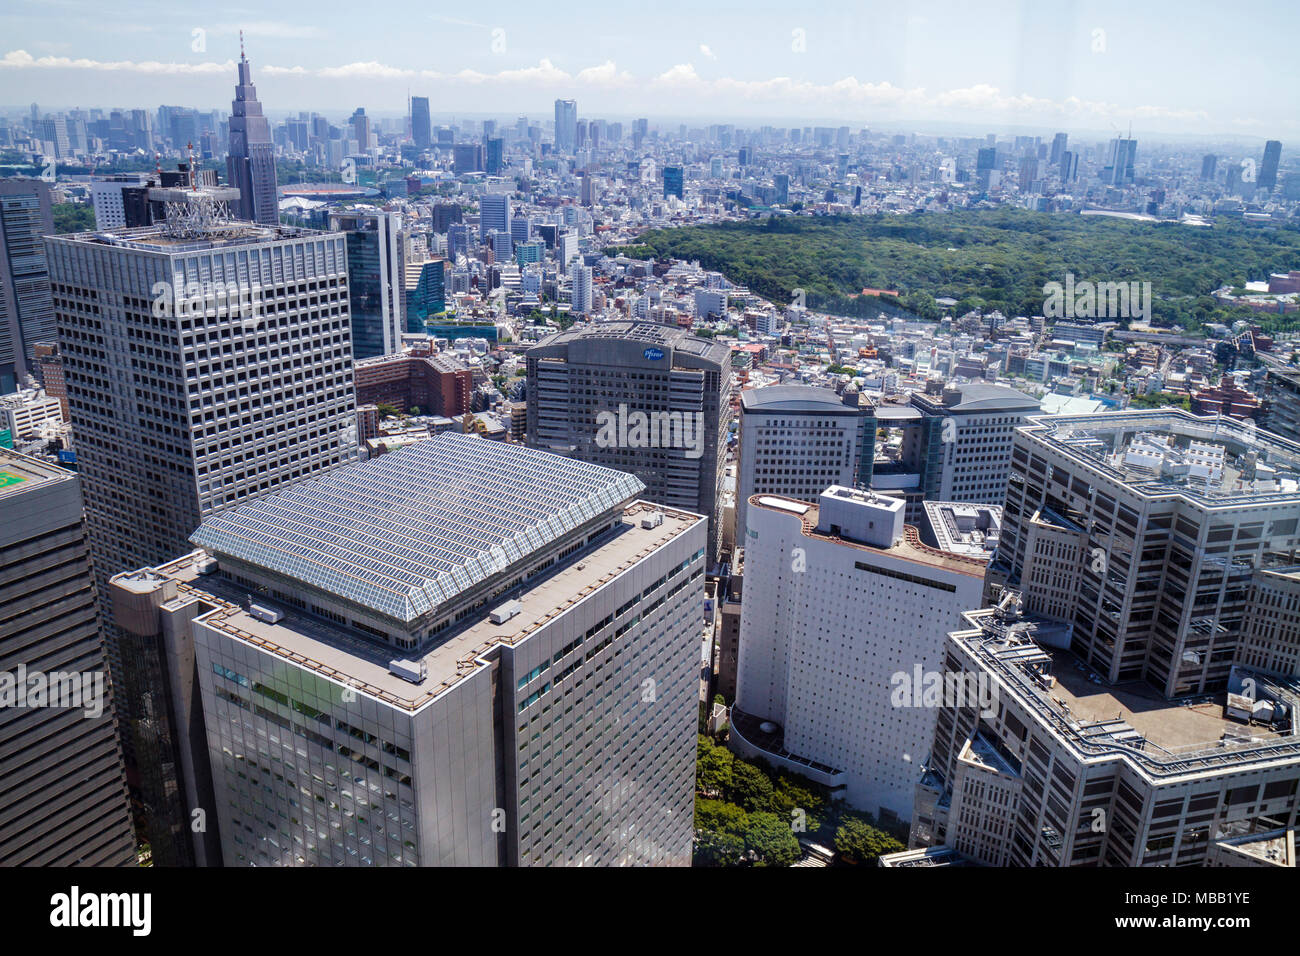 Tokyo Japan,Shinjuku,Tokyo Metropolitan Government Office No.1 Main building,observatory,45th floor,aerial view,window,city skyline,skyscrapers,high r Stock Photo